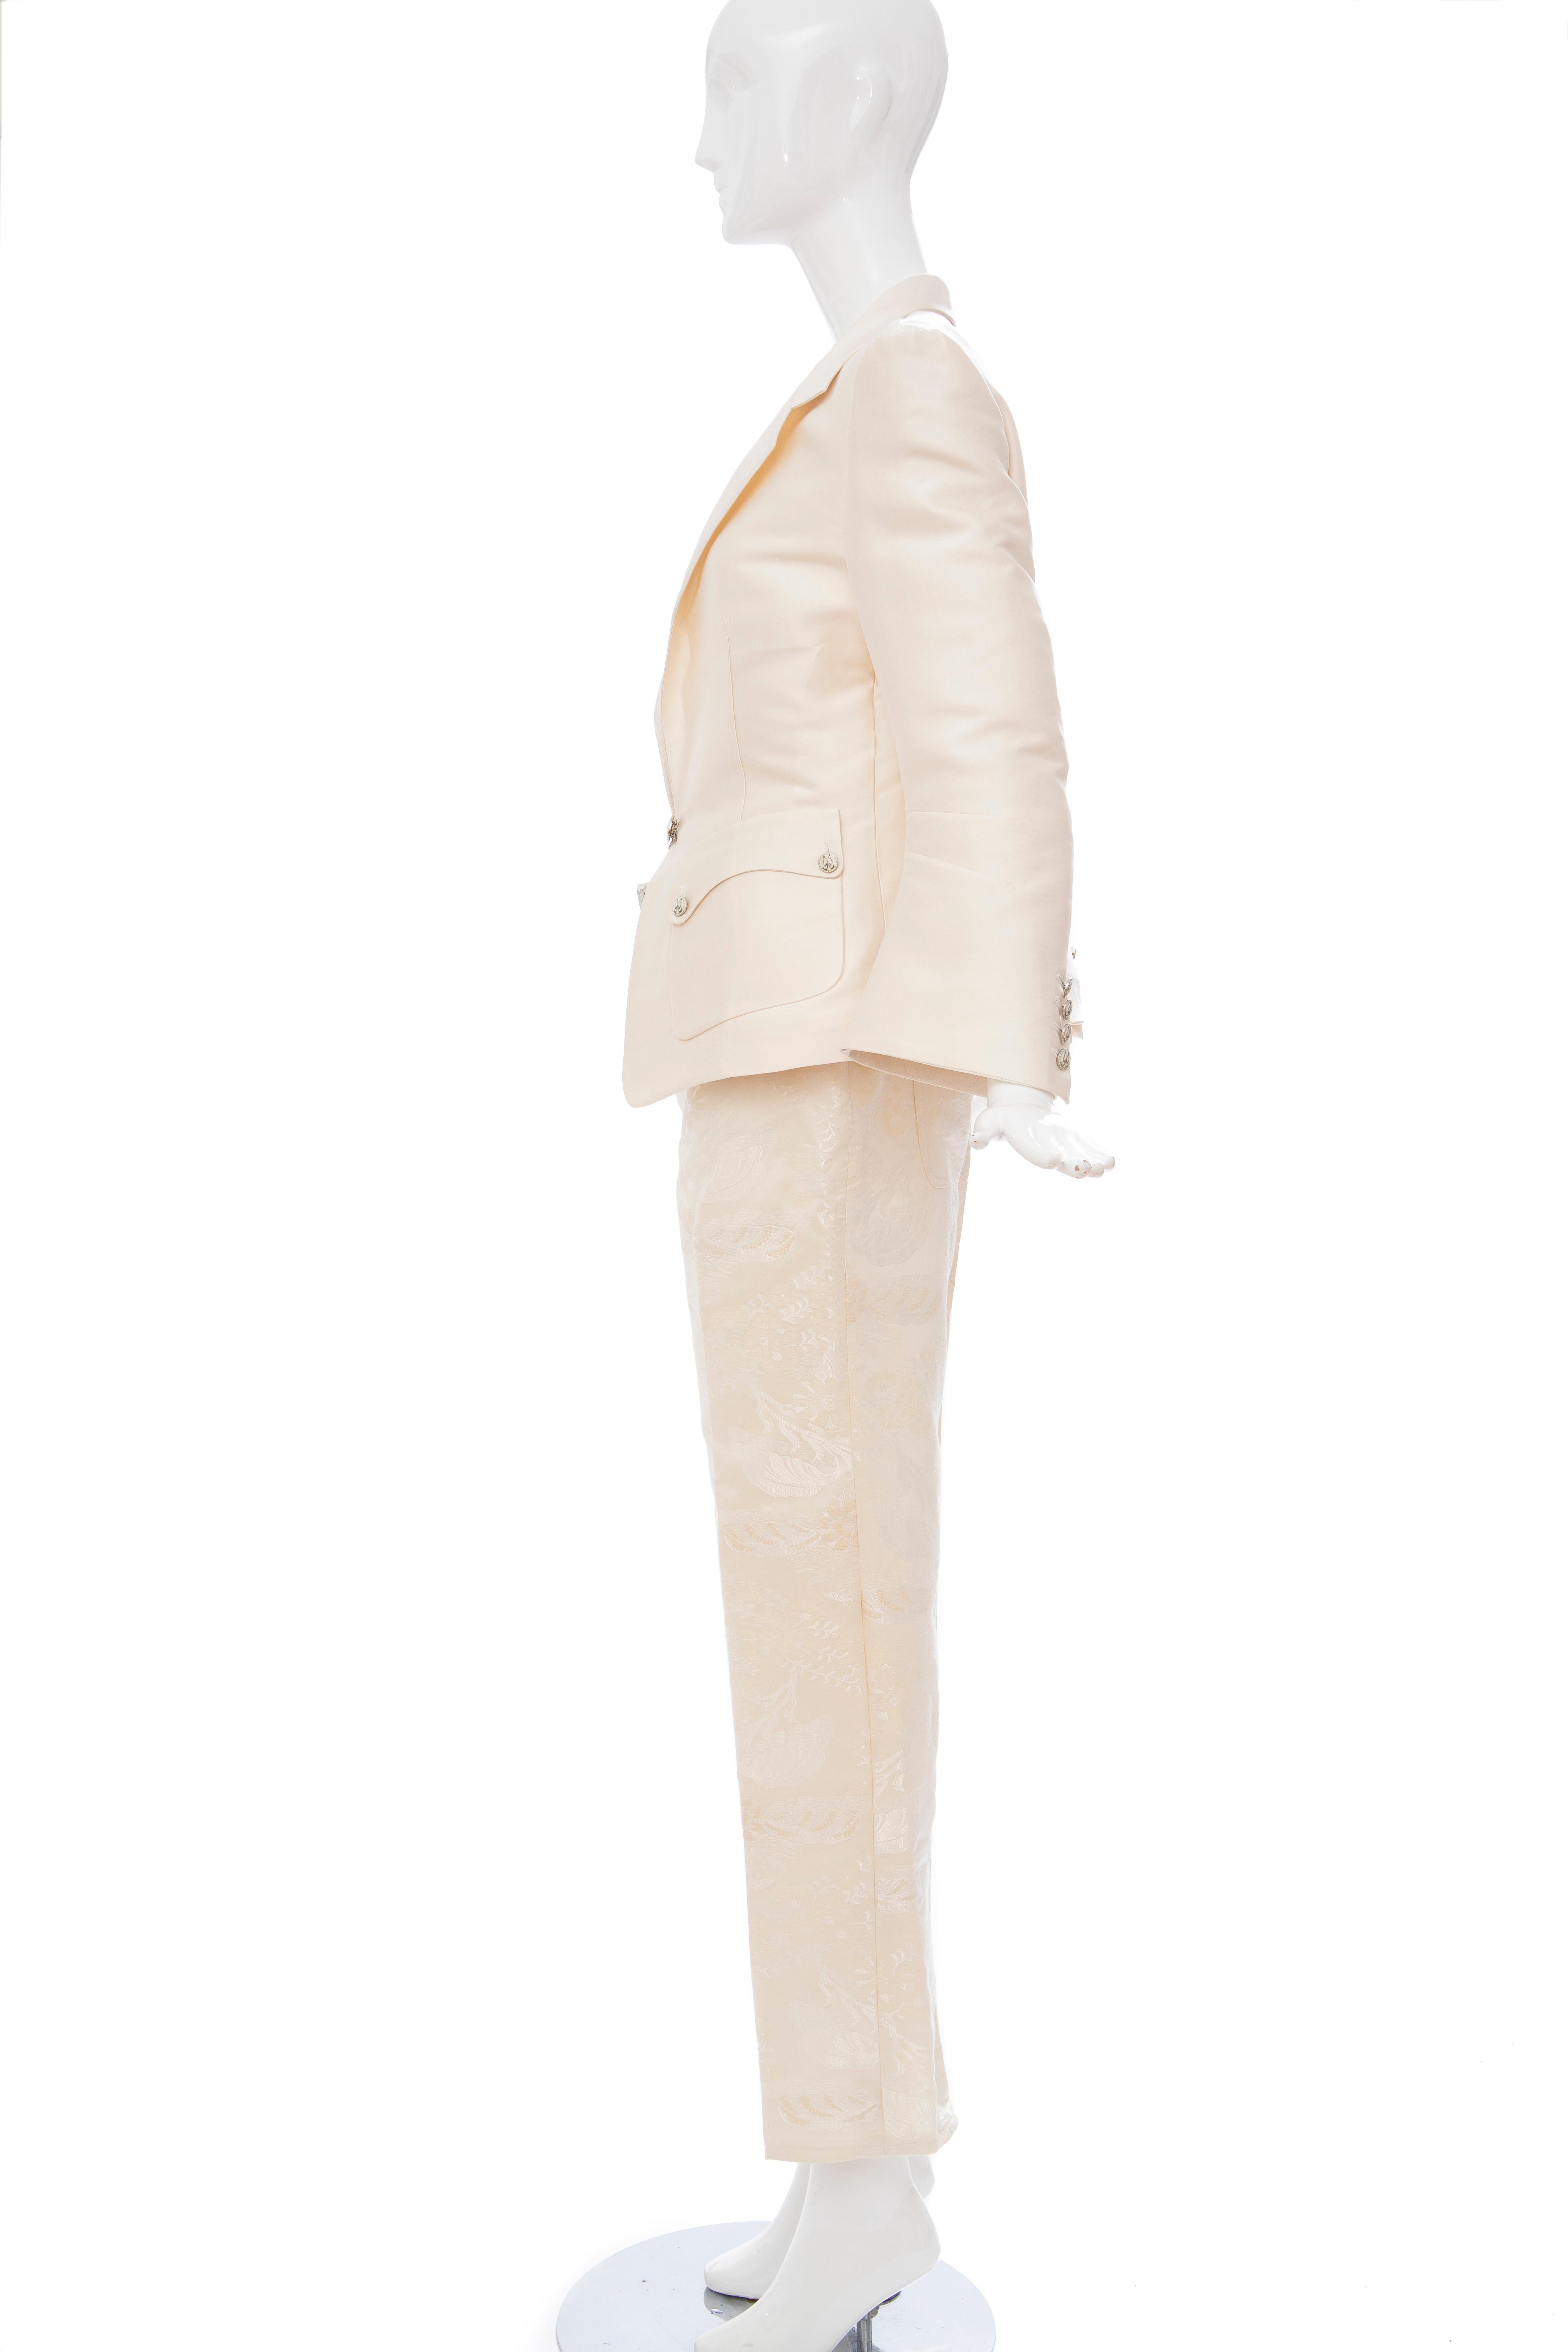 Women's Nicolas Ghesquière for Balenciaga Runway Silk Jacquard Pant Suit, Spring 2006 For Sale